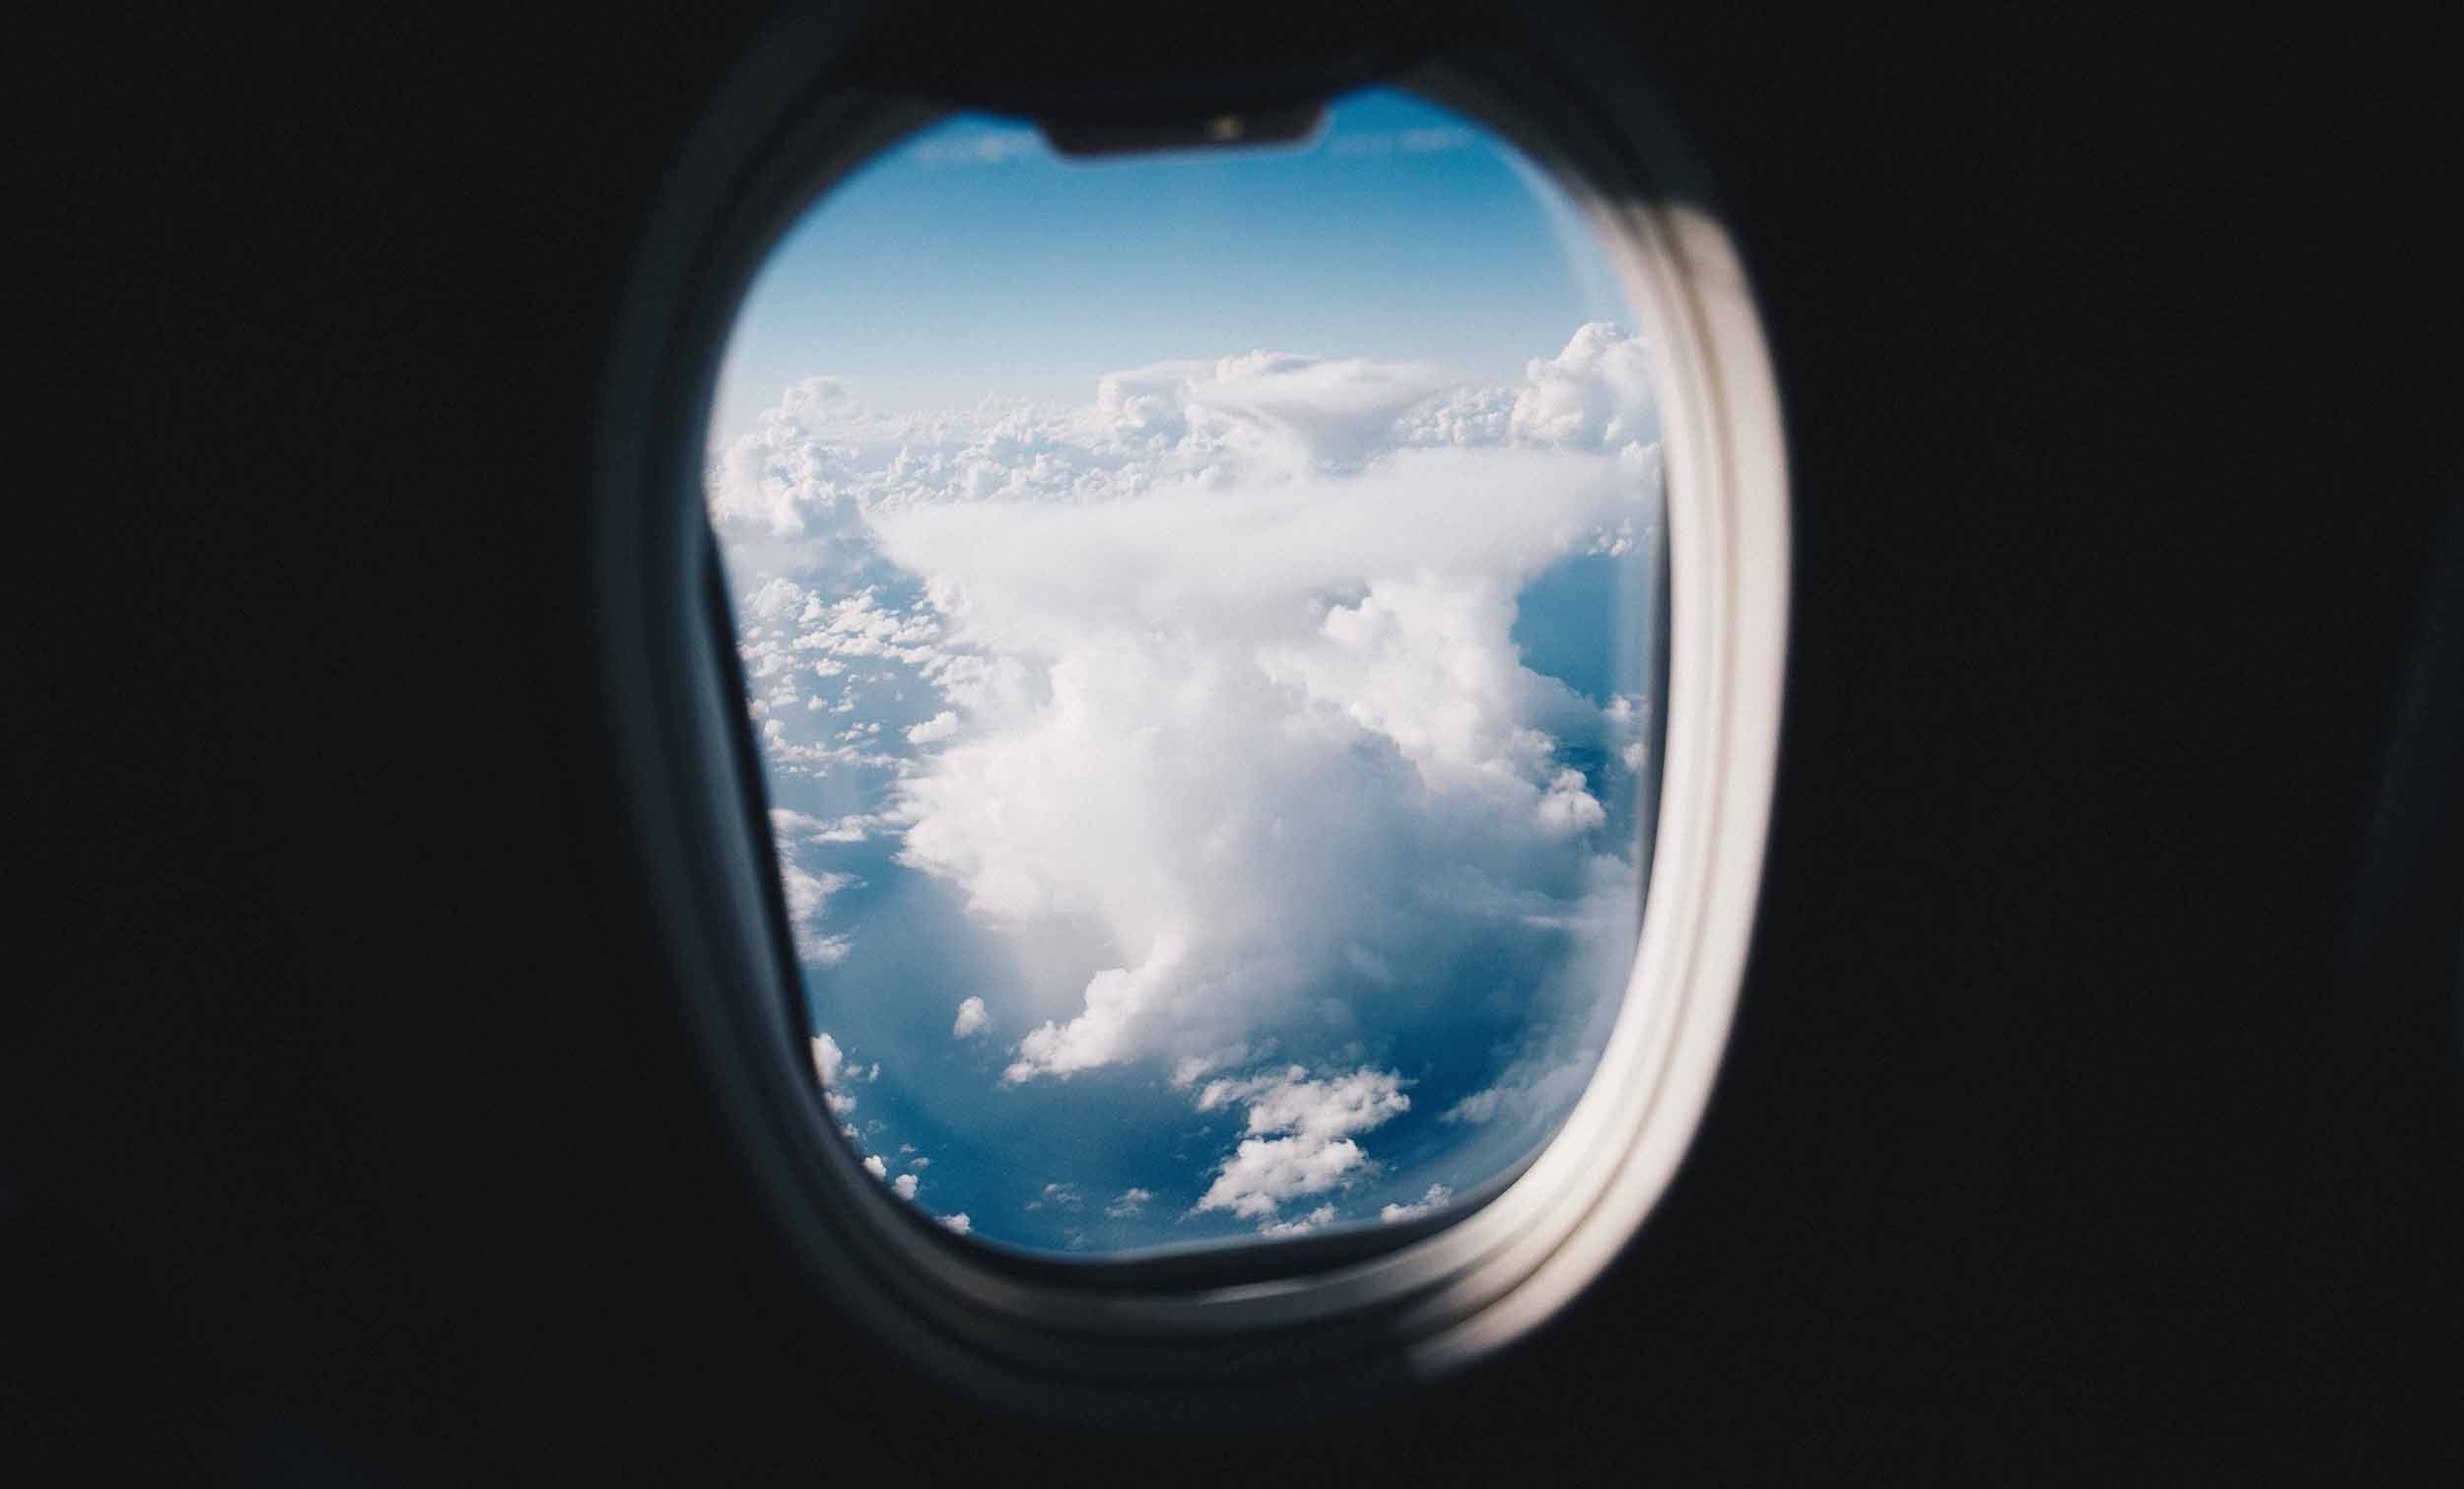 Clouds and blue sky outside a plane window